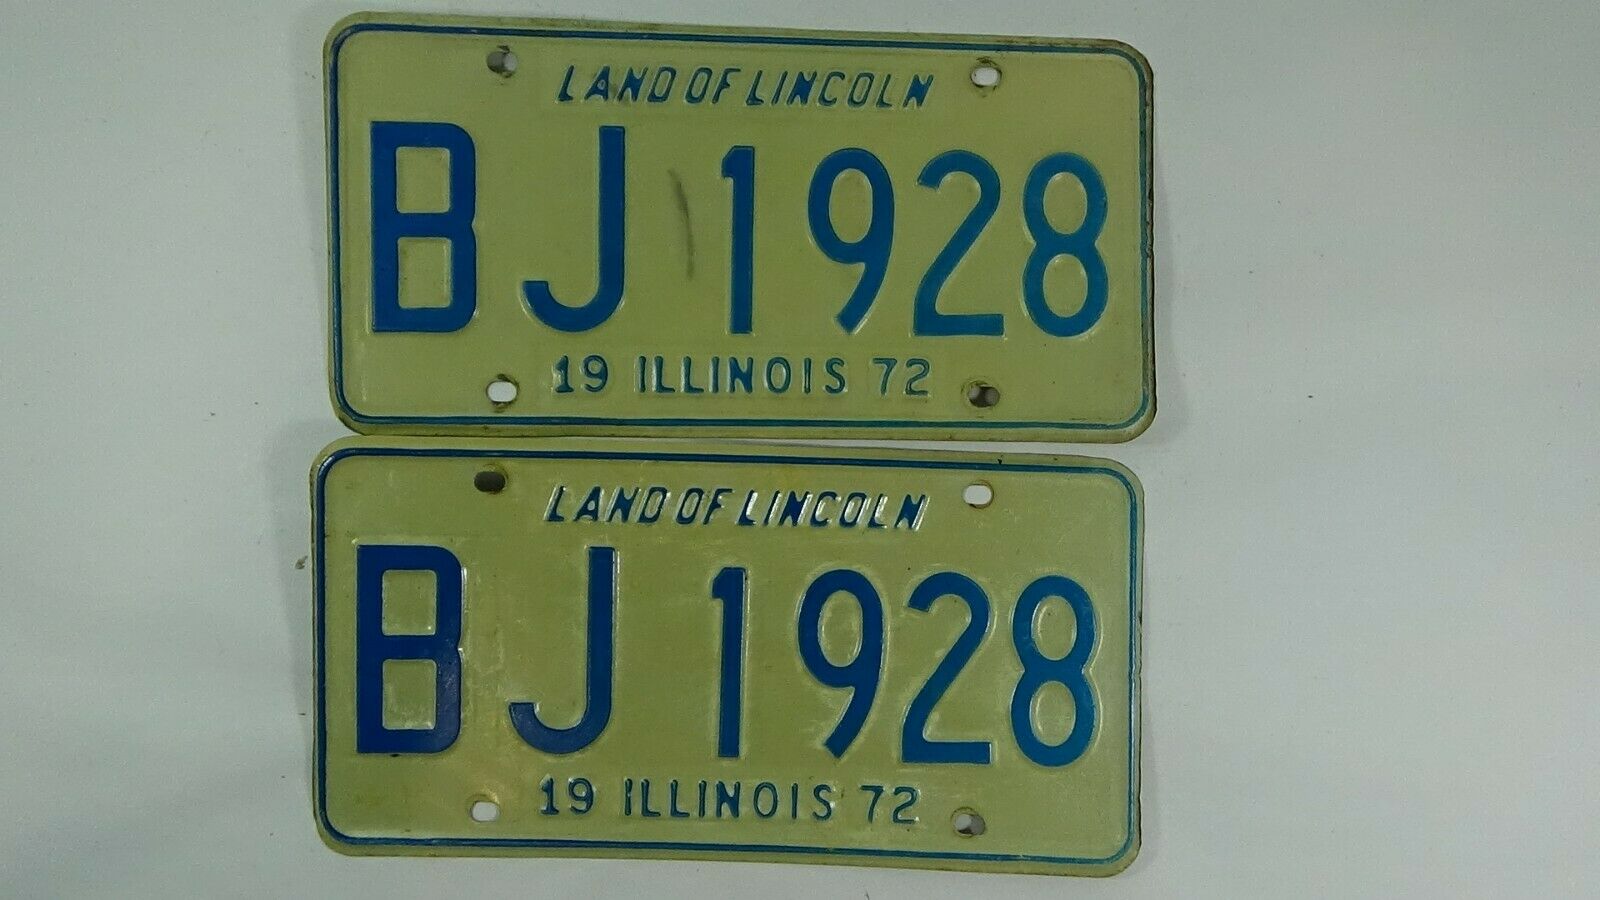 1972 Illinois Land of Lincoln BJ1928 vintage license plates pair #846-11